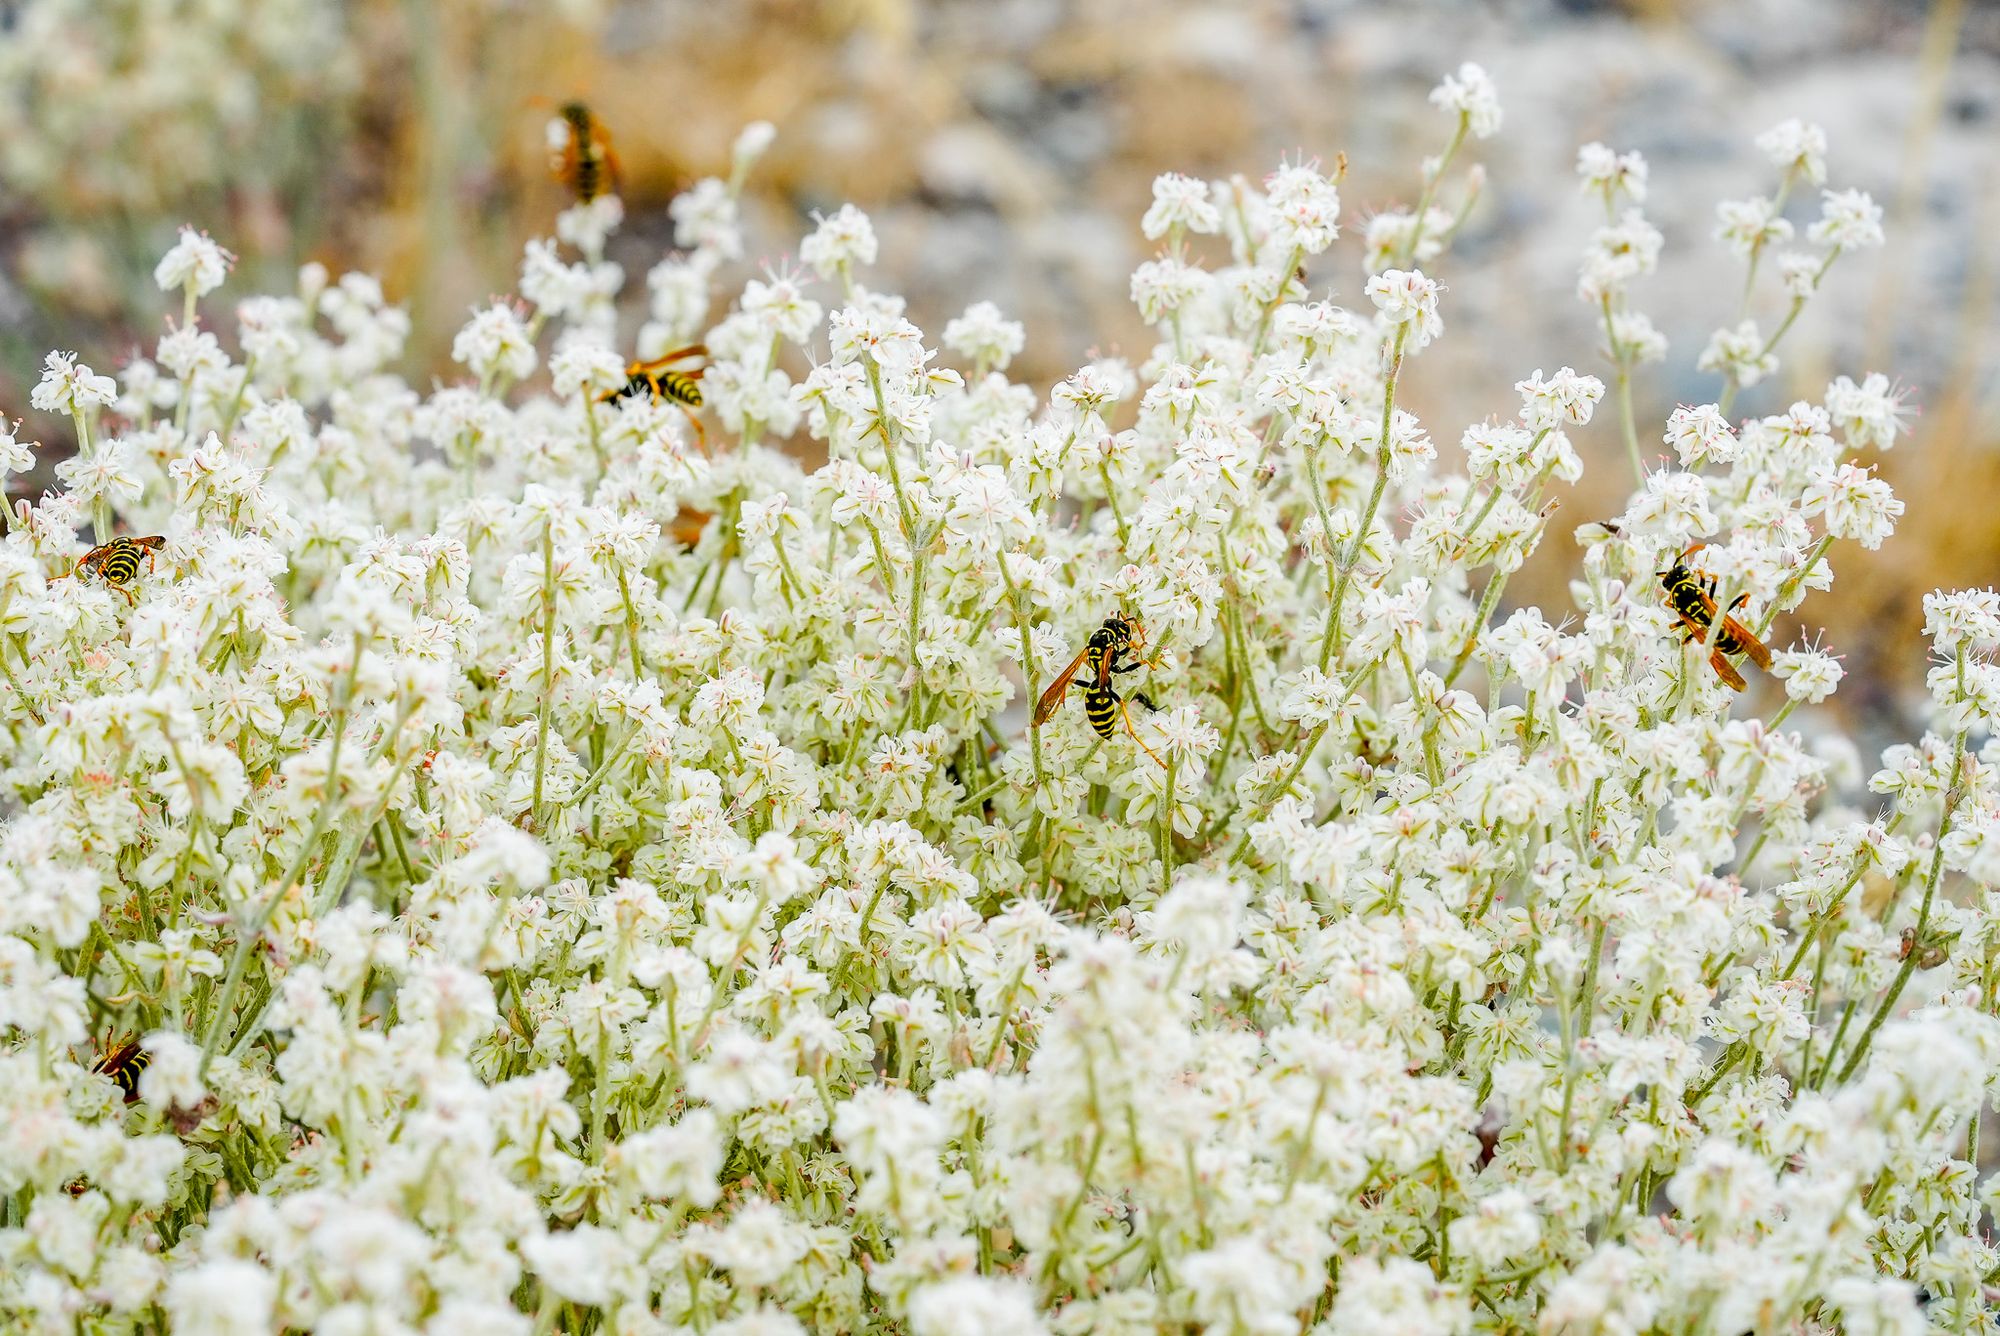 wasps in snow buckwheat